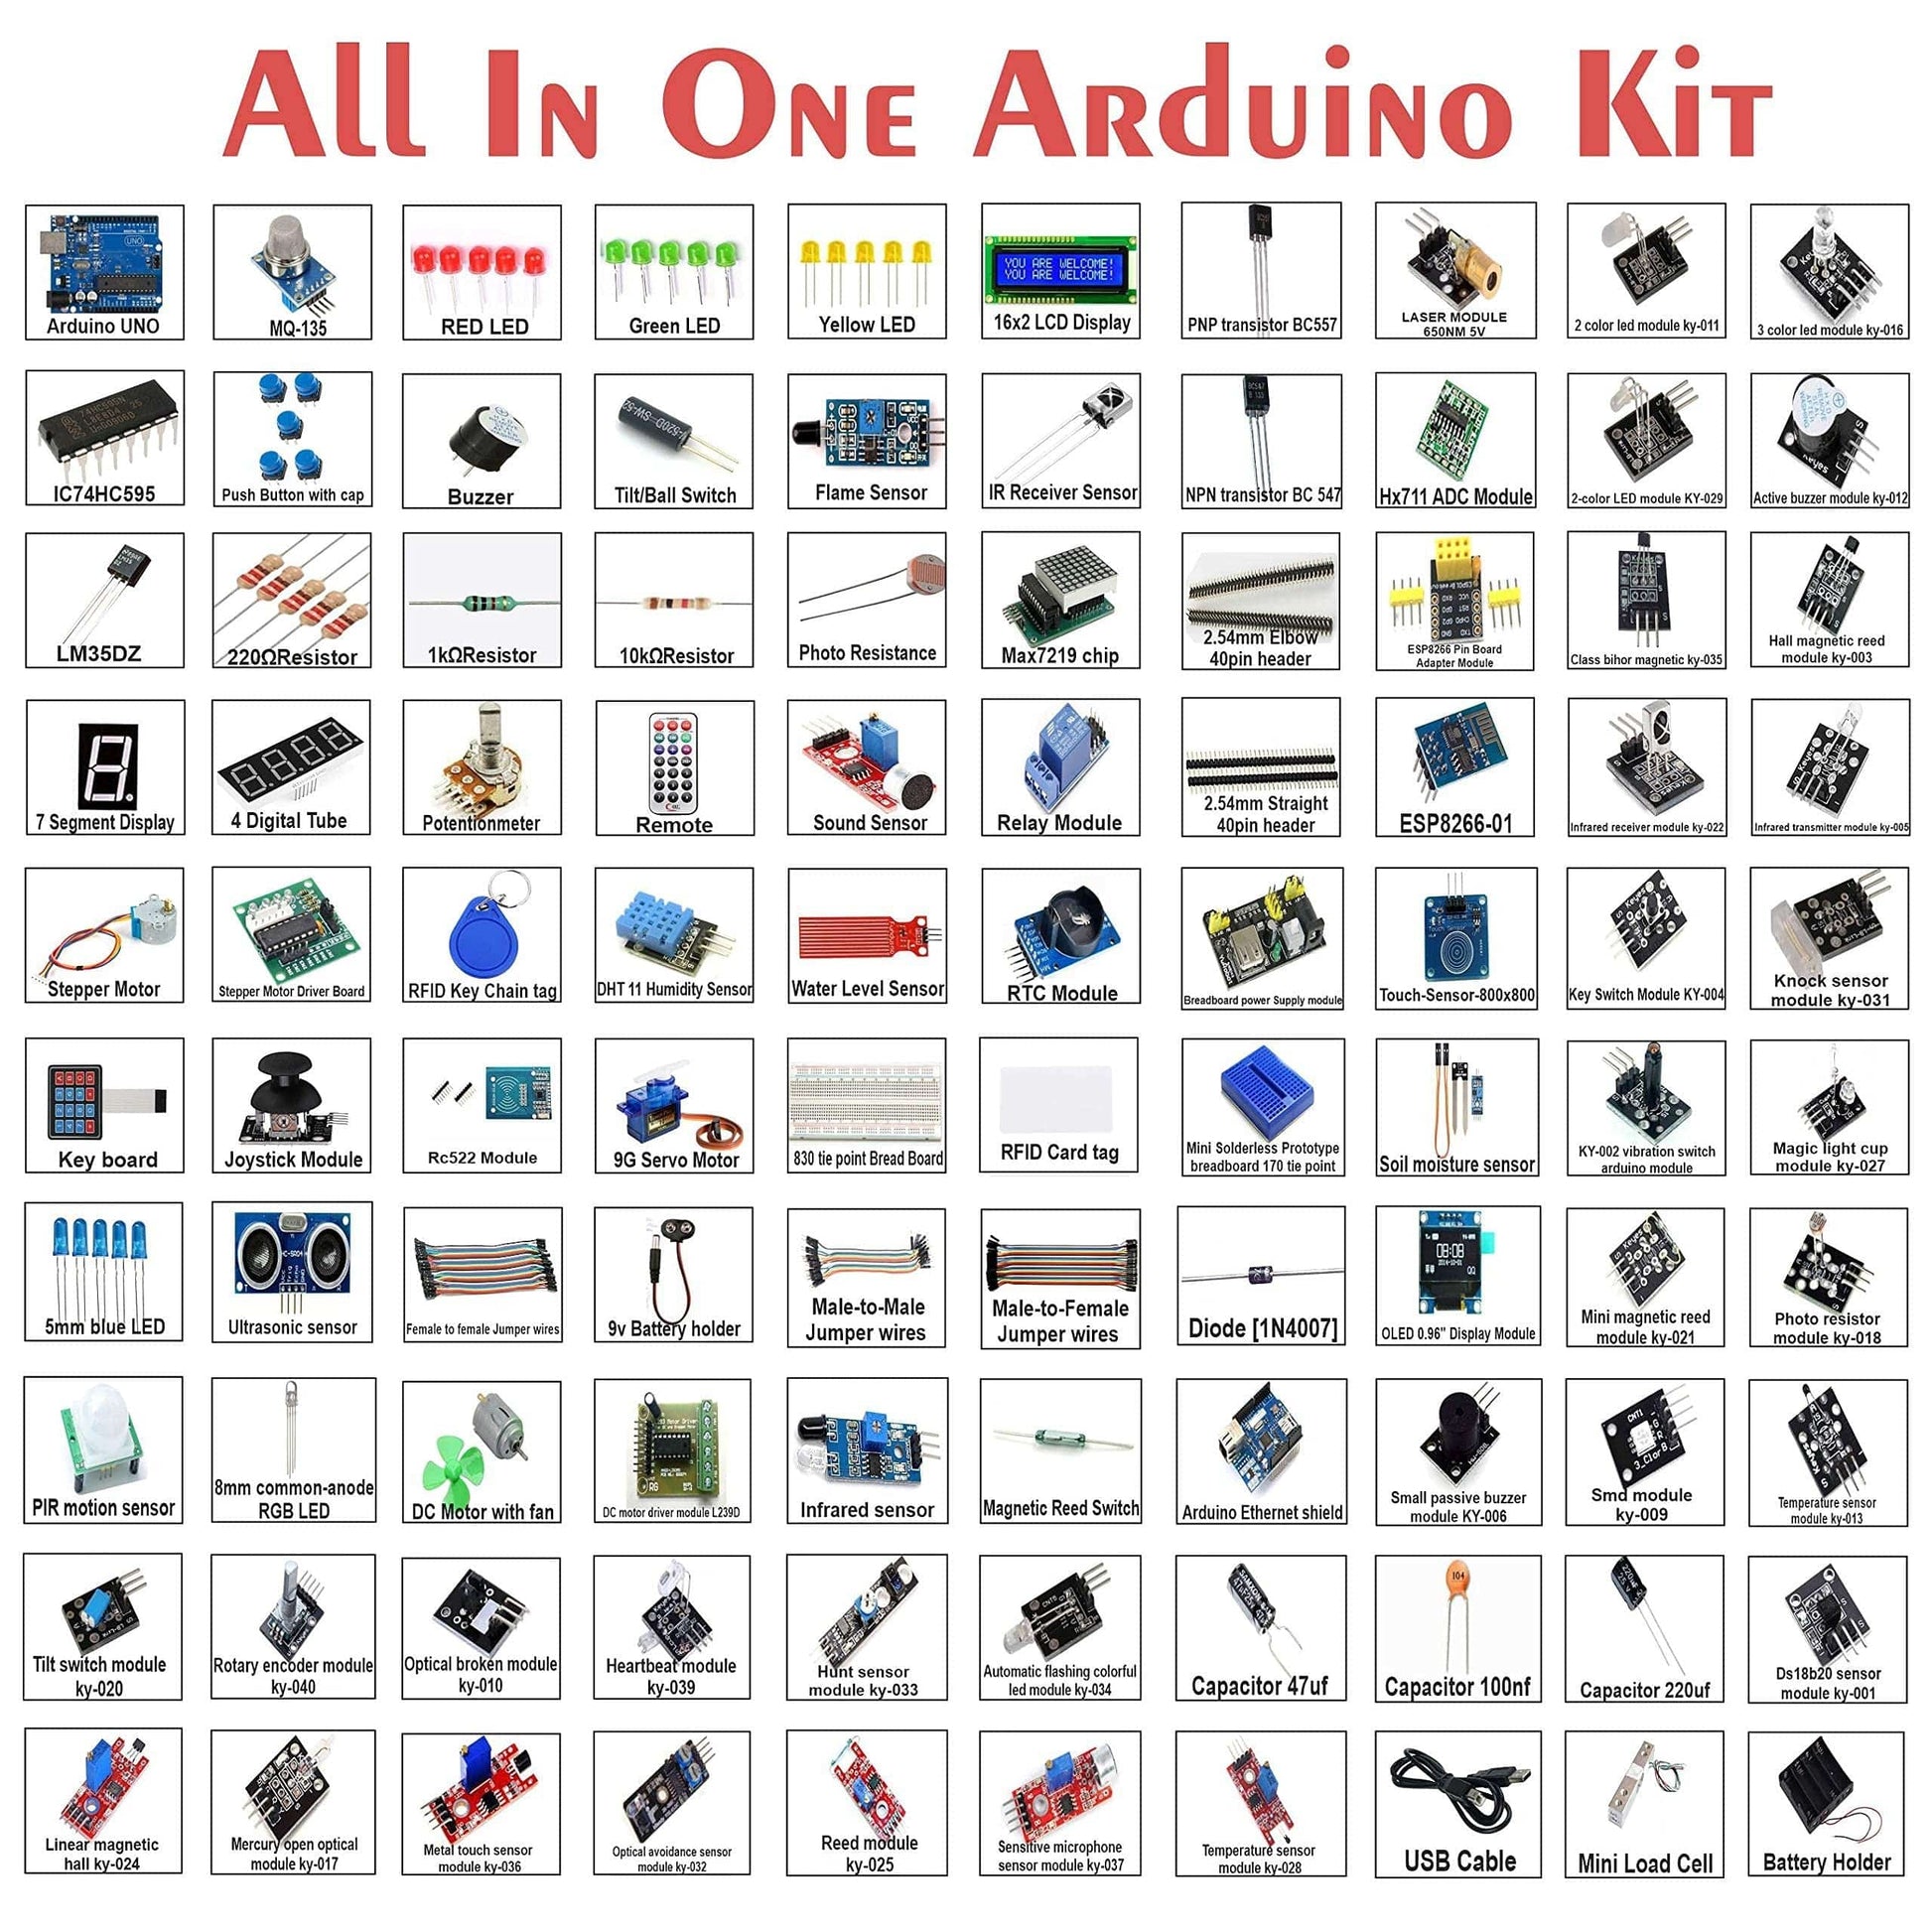 Mastering Adruino Uno - All in One Adruino Kits (100+ Components & Modules) Including Codes/Tutorials/Videos - B08T9M5QL_8 - REES52